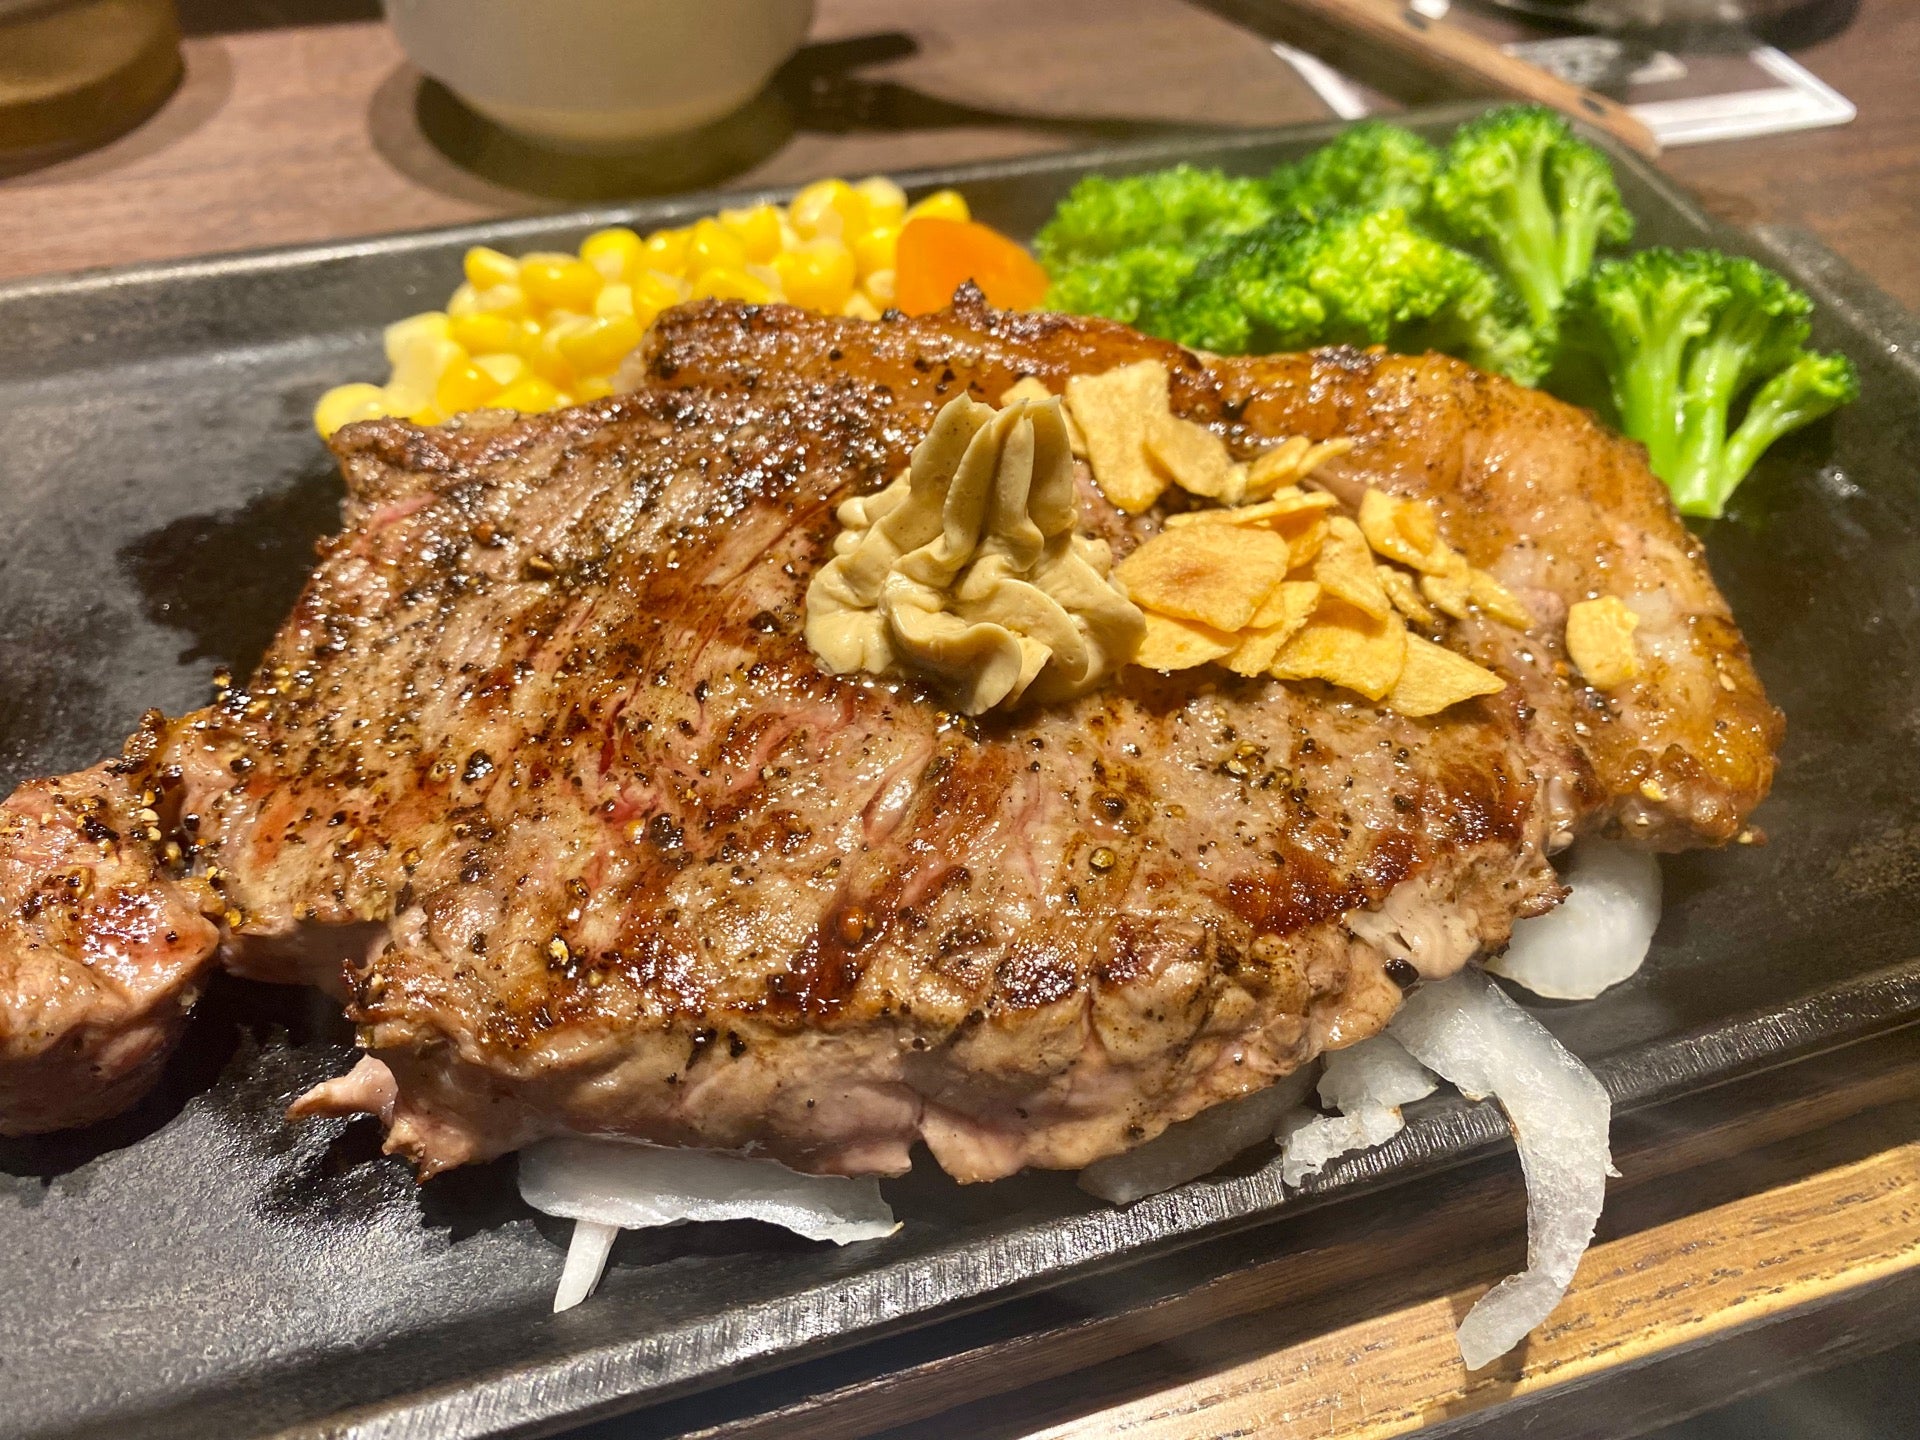 Ikinari Steak (いきなり!ステーキ)